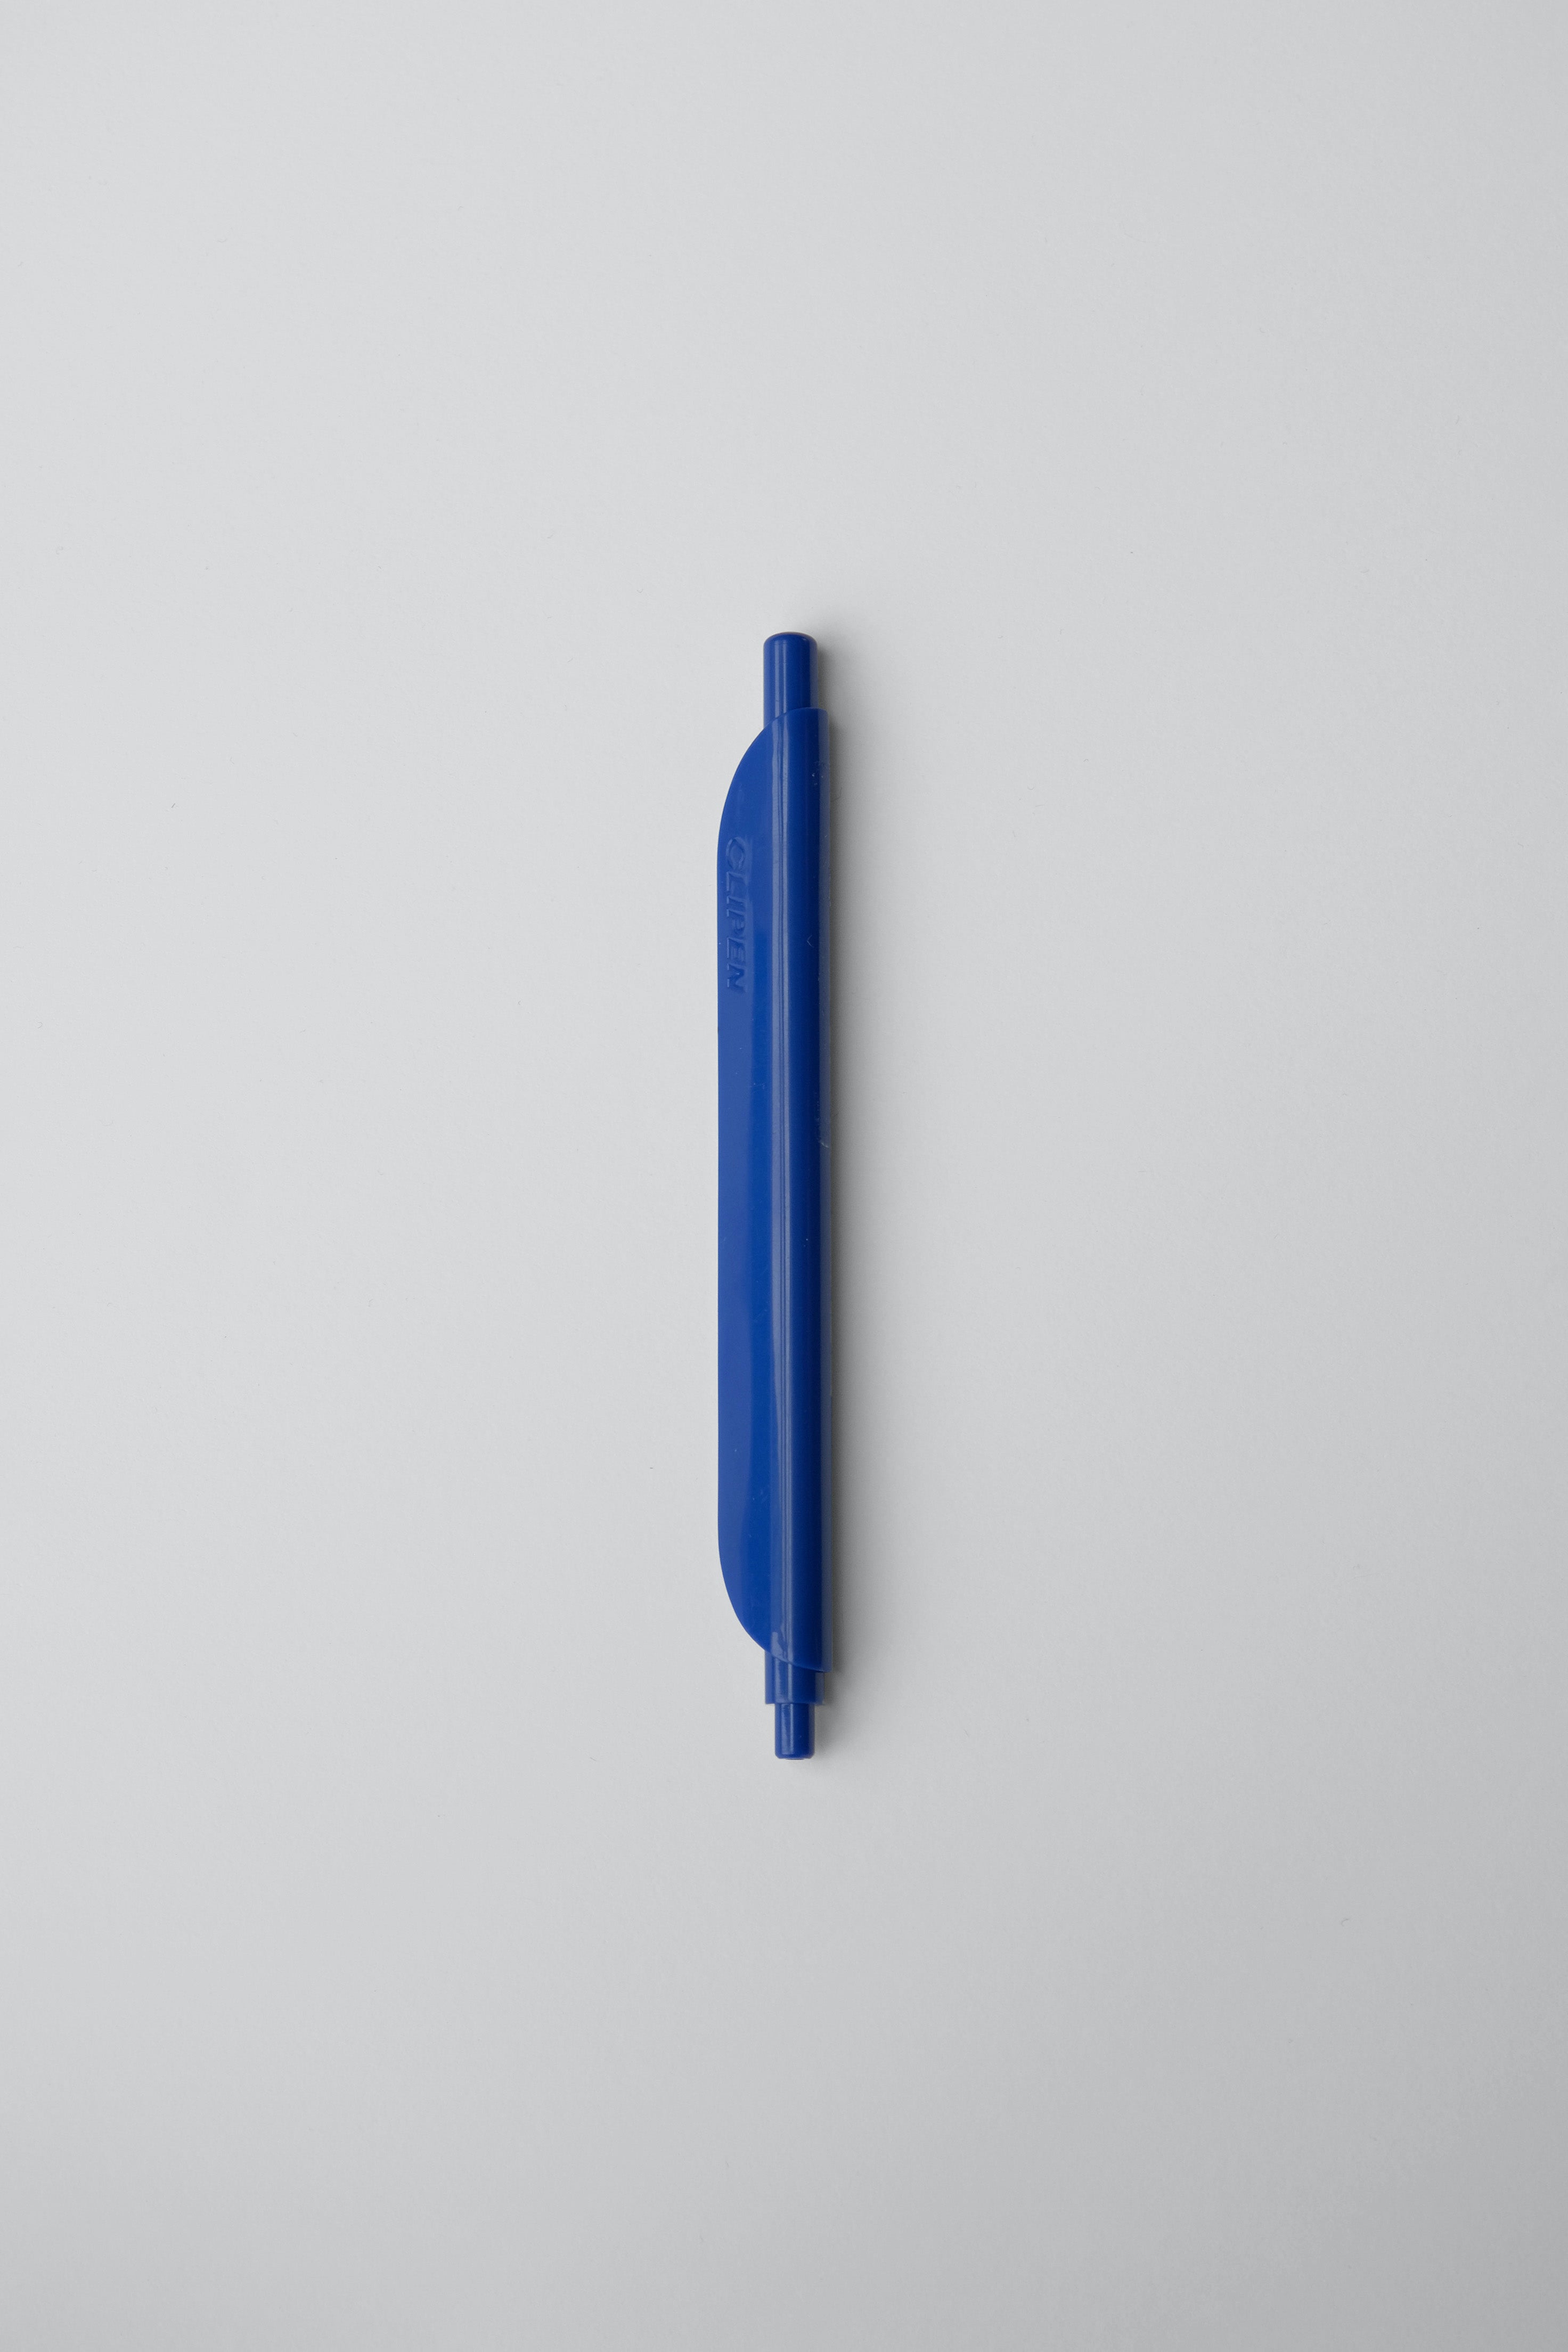 Clipen dark blue-Clipen-[interior]-[design]-KIOSK48TH